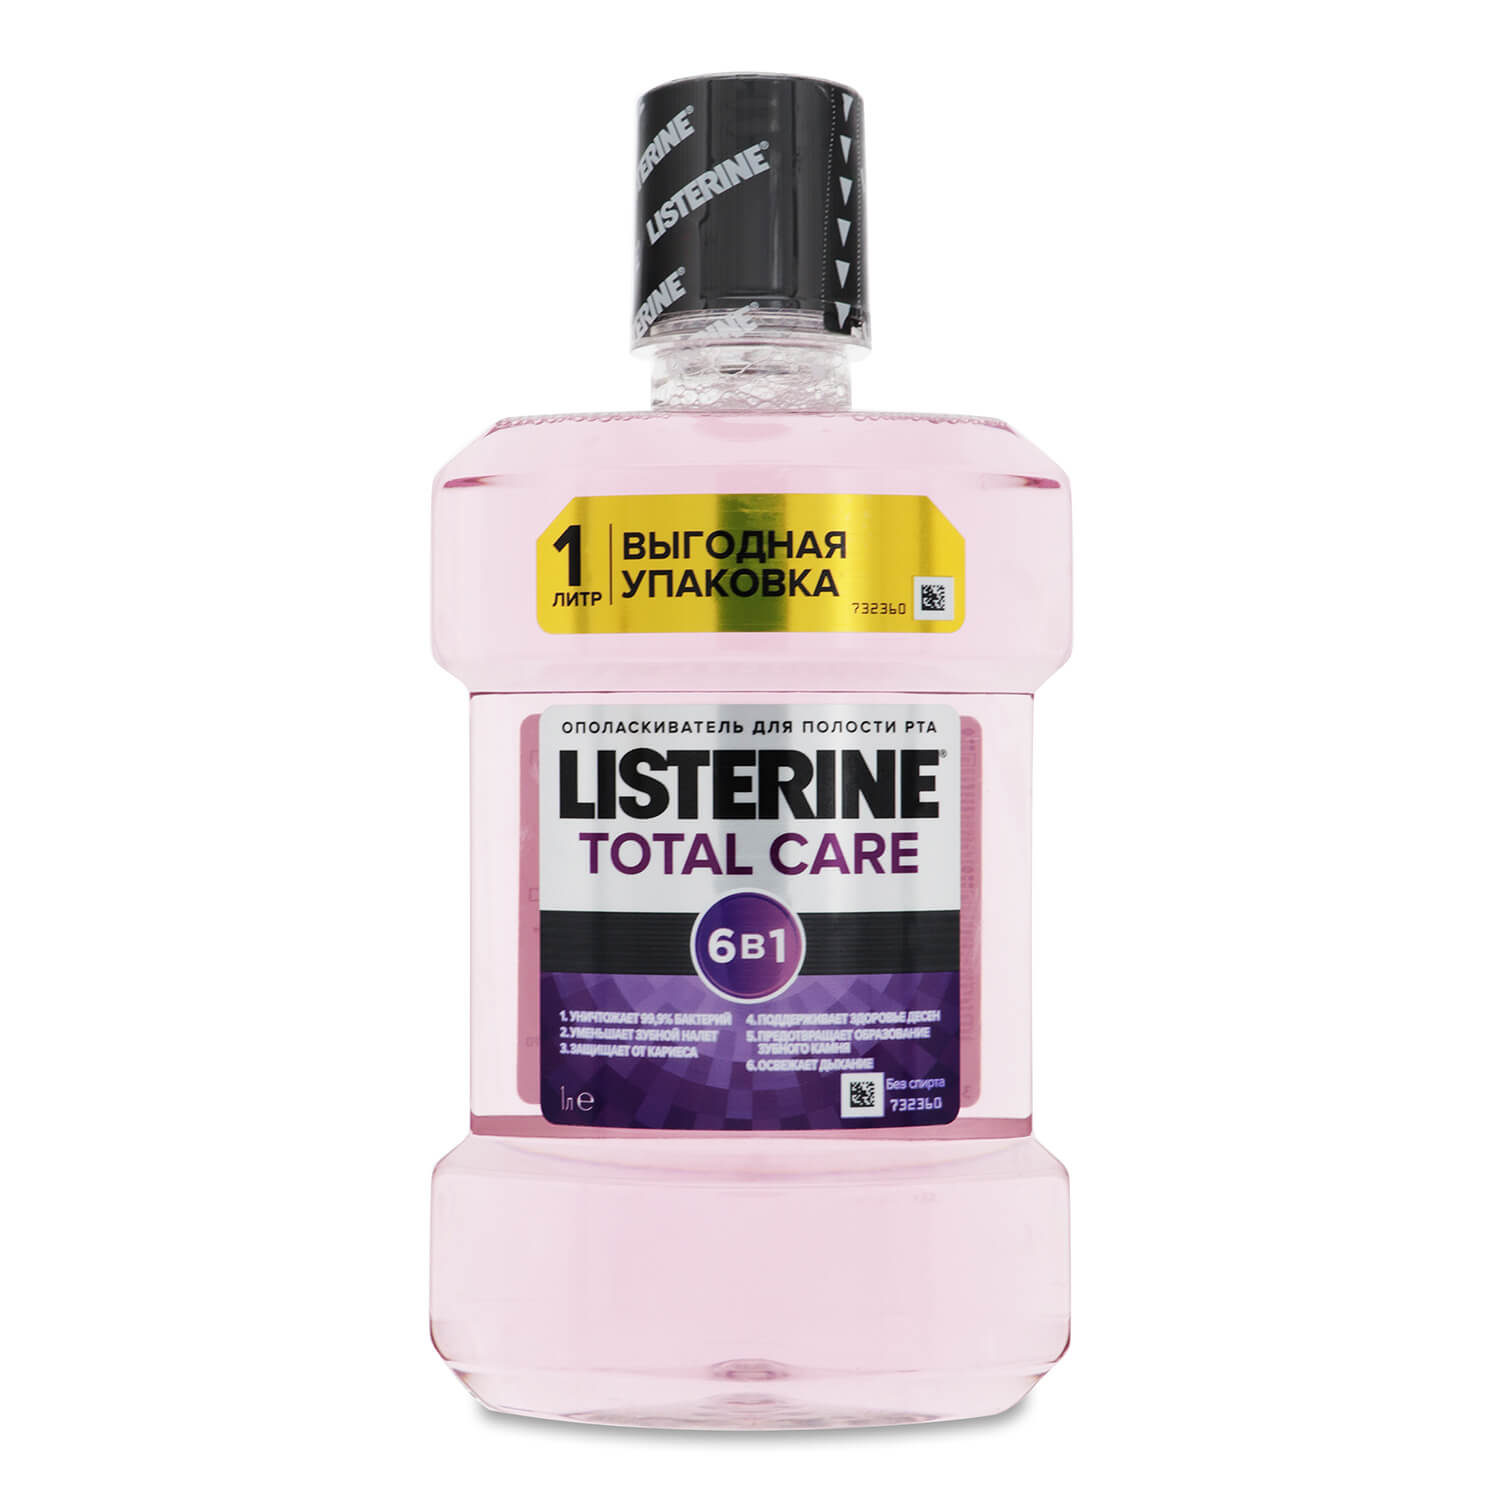 Ополаскиватель для рта Listerine Total Care, 1000мл (Артикул: 870764)